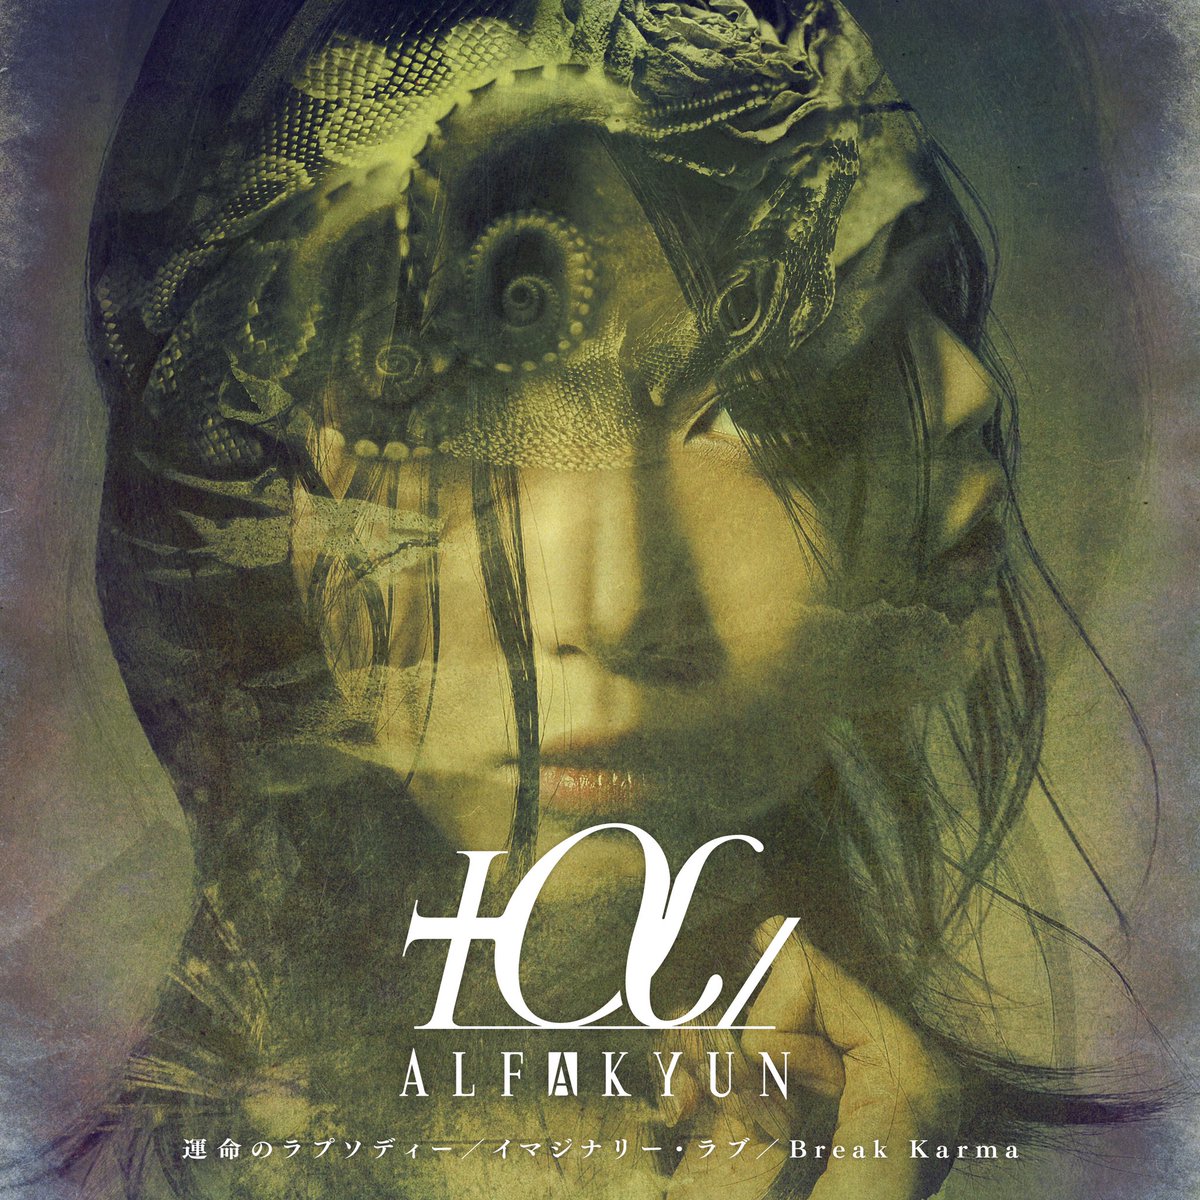 Cover art for『+α/Alfakyun. - Break Karma』from the release『Unmei no Rhapsody / Imaginary Love / Break Karma』